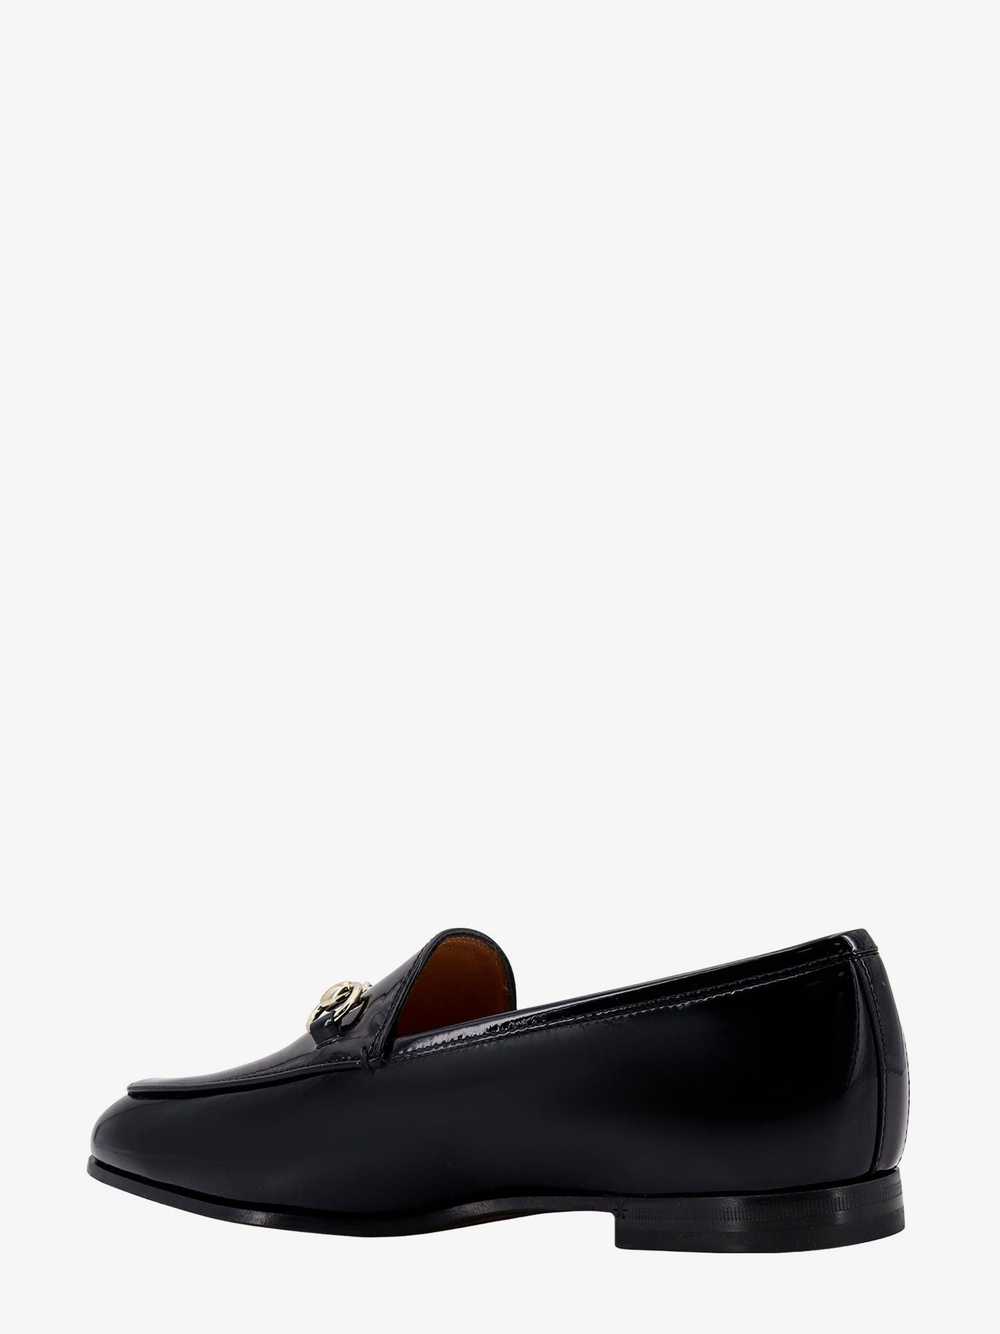 Gucci Jordaan Woman Black Loafers - image 3